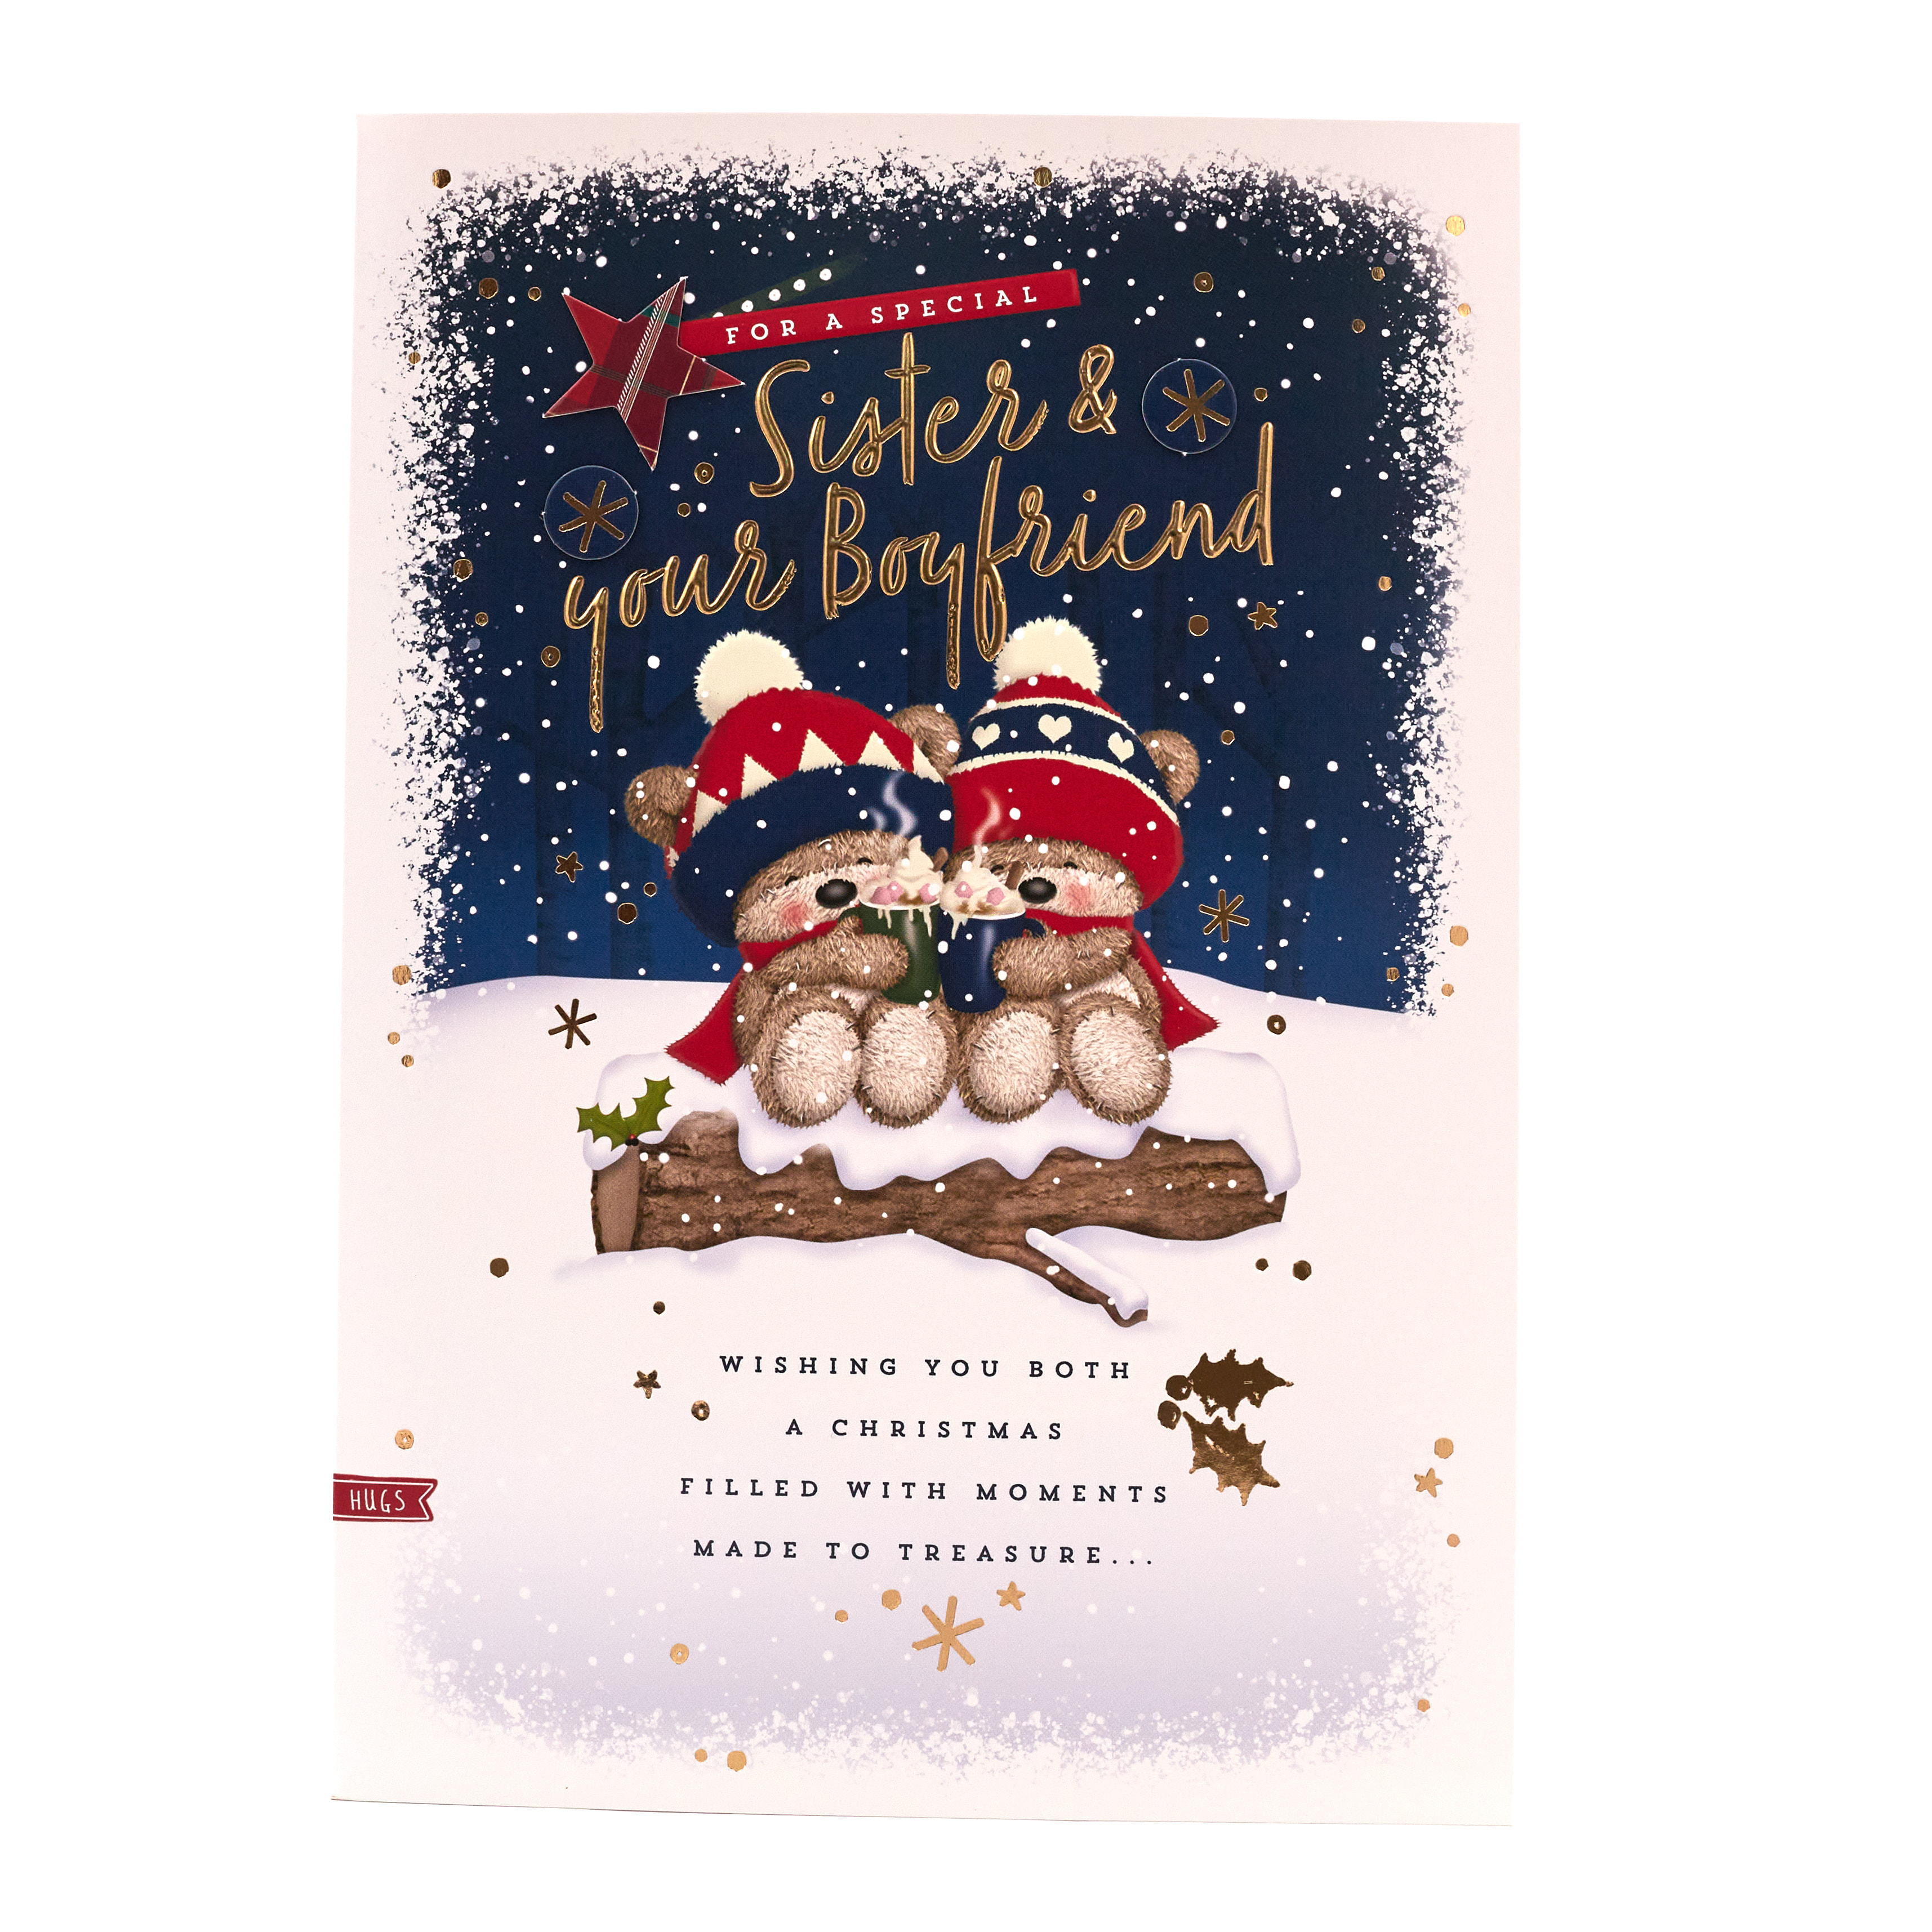 Hugs Bear Christmas Card - Sister And Boyfriend, Cute Bears With Hot Chocolate